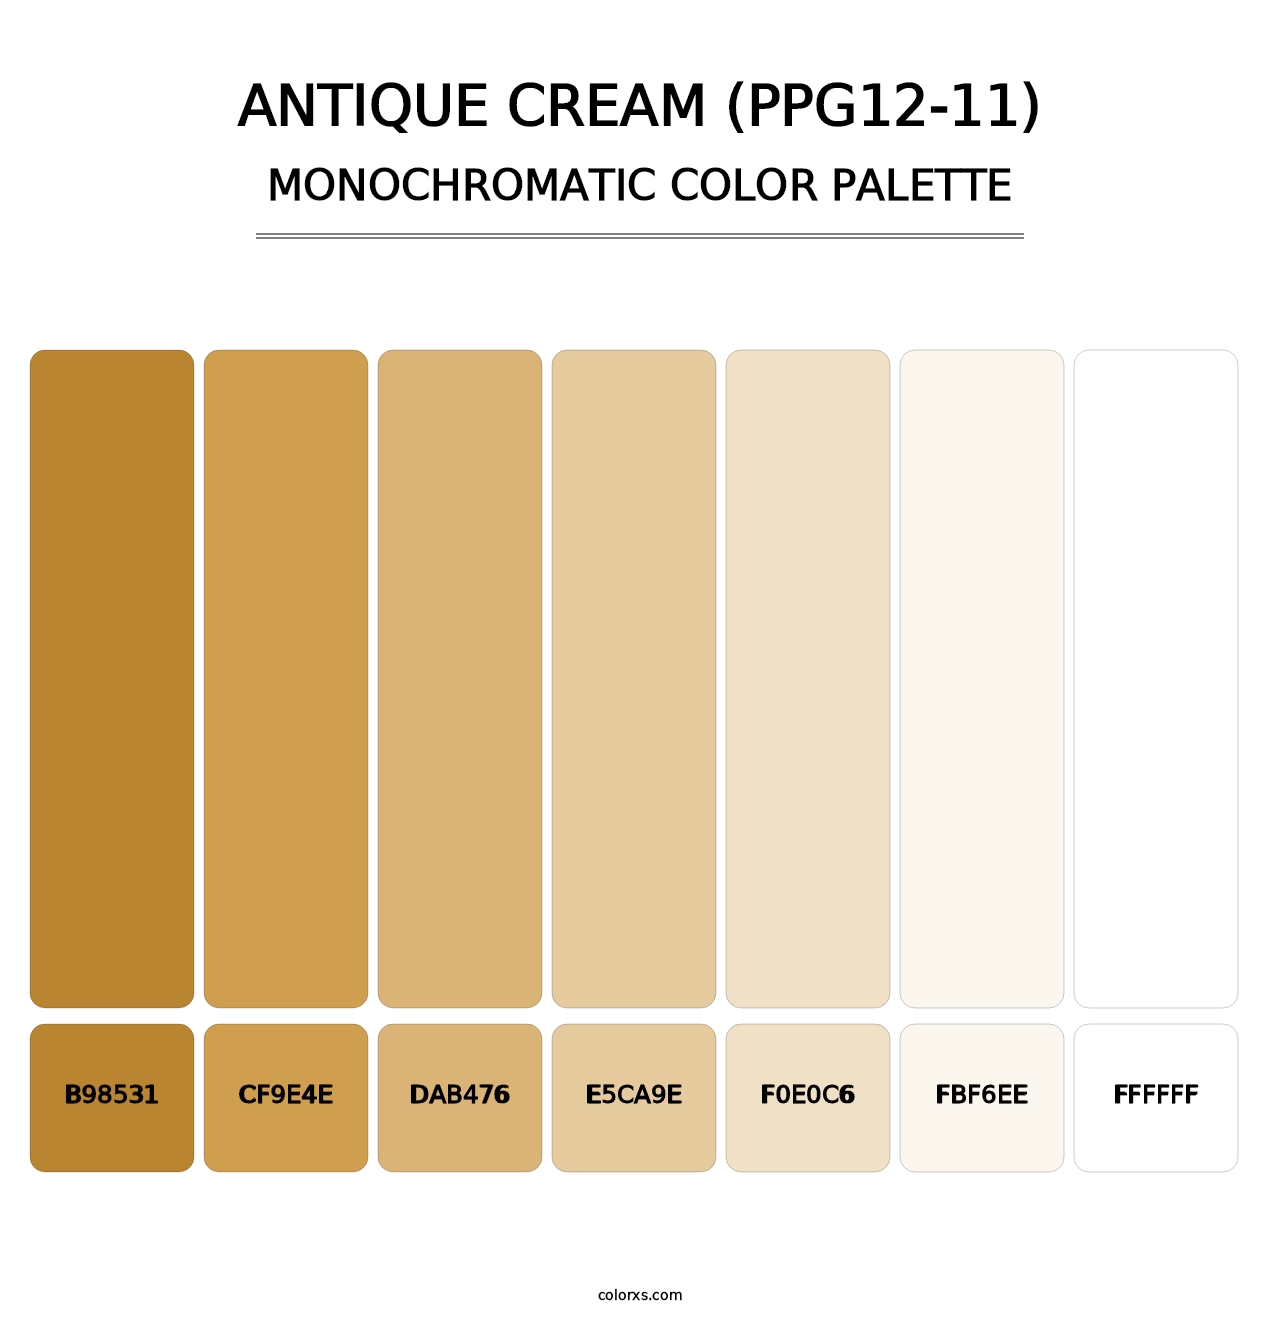 Antique Cream (PPG12-11) - Monochromatic Color Palette